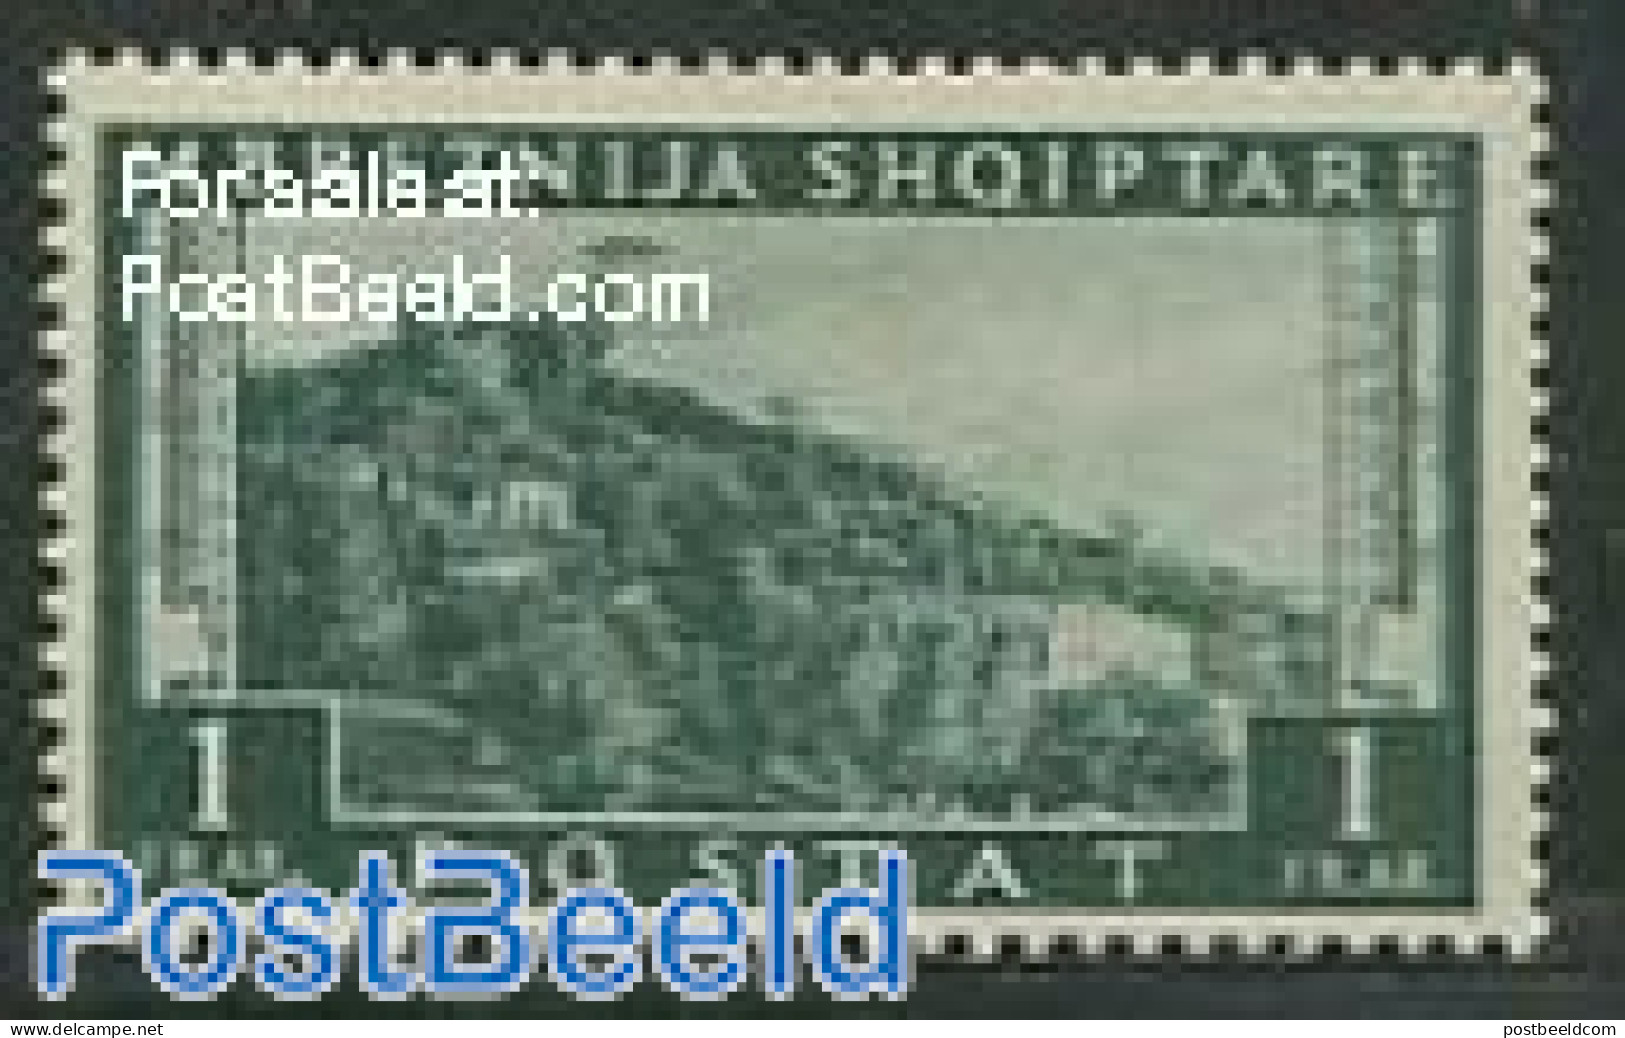 Albania 1939 1Fr, Stamp Out Of Set, Mint NH, Art - Castles & Fortifications - Kastelen